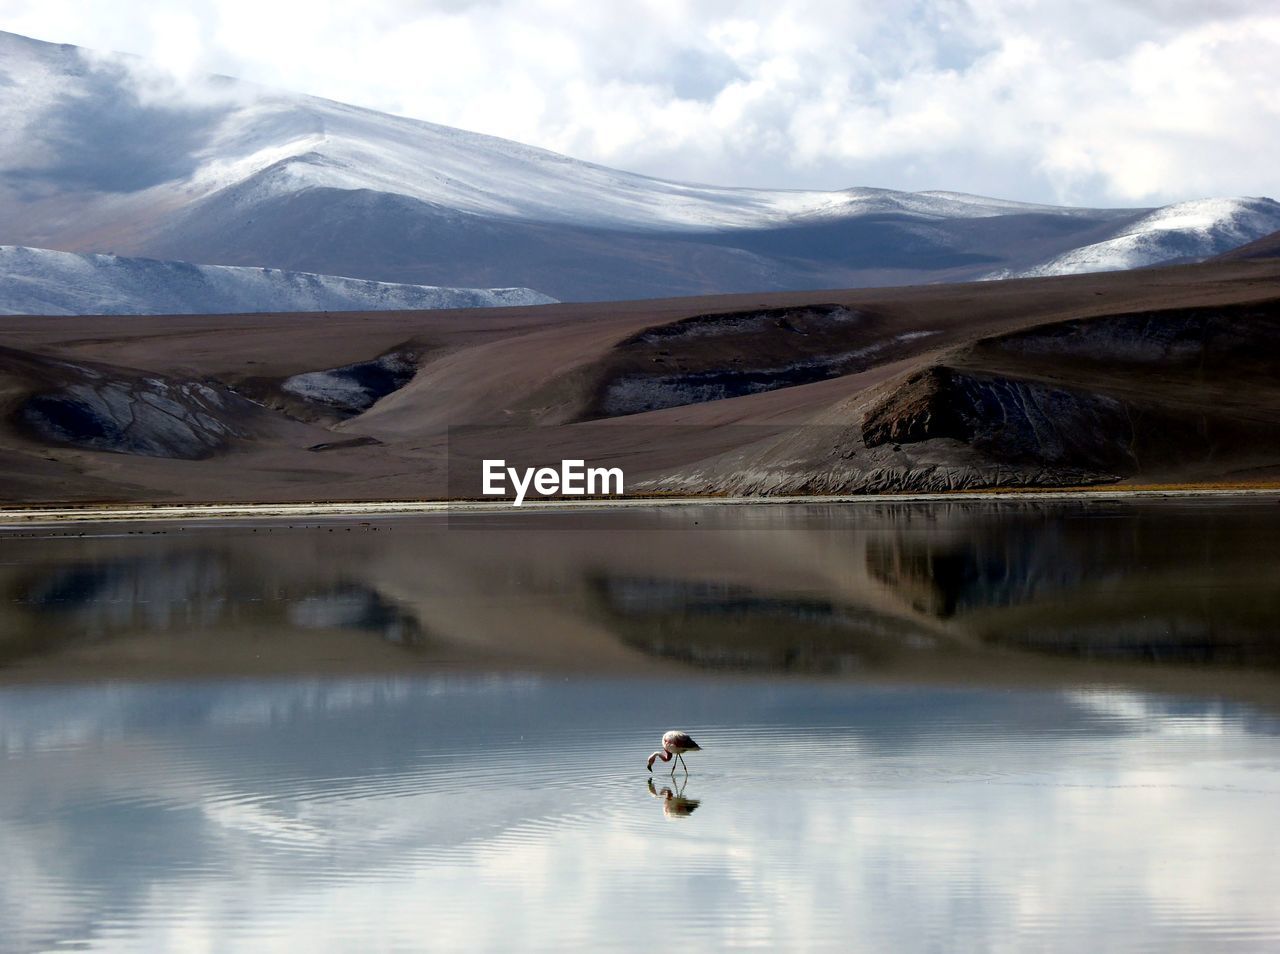 Flamingo on lake with reflection of mountain